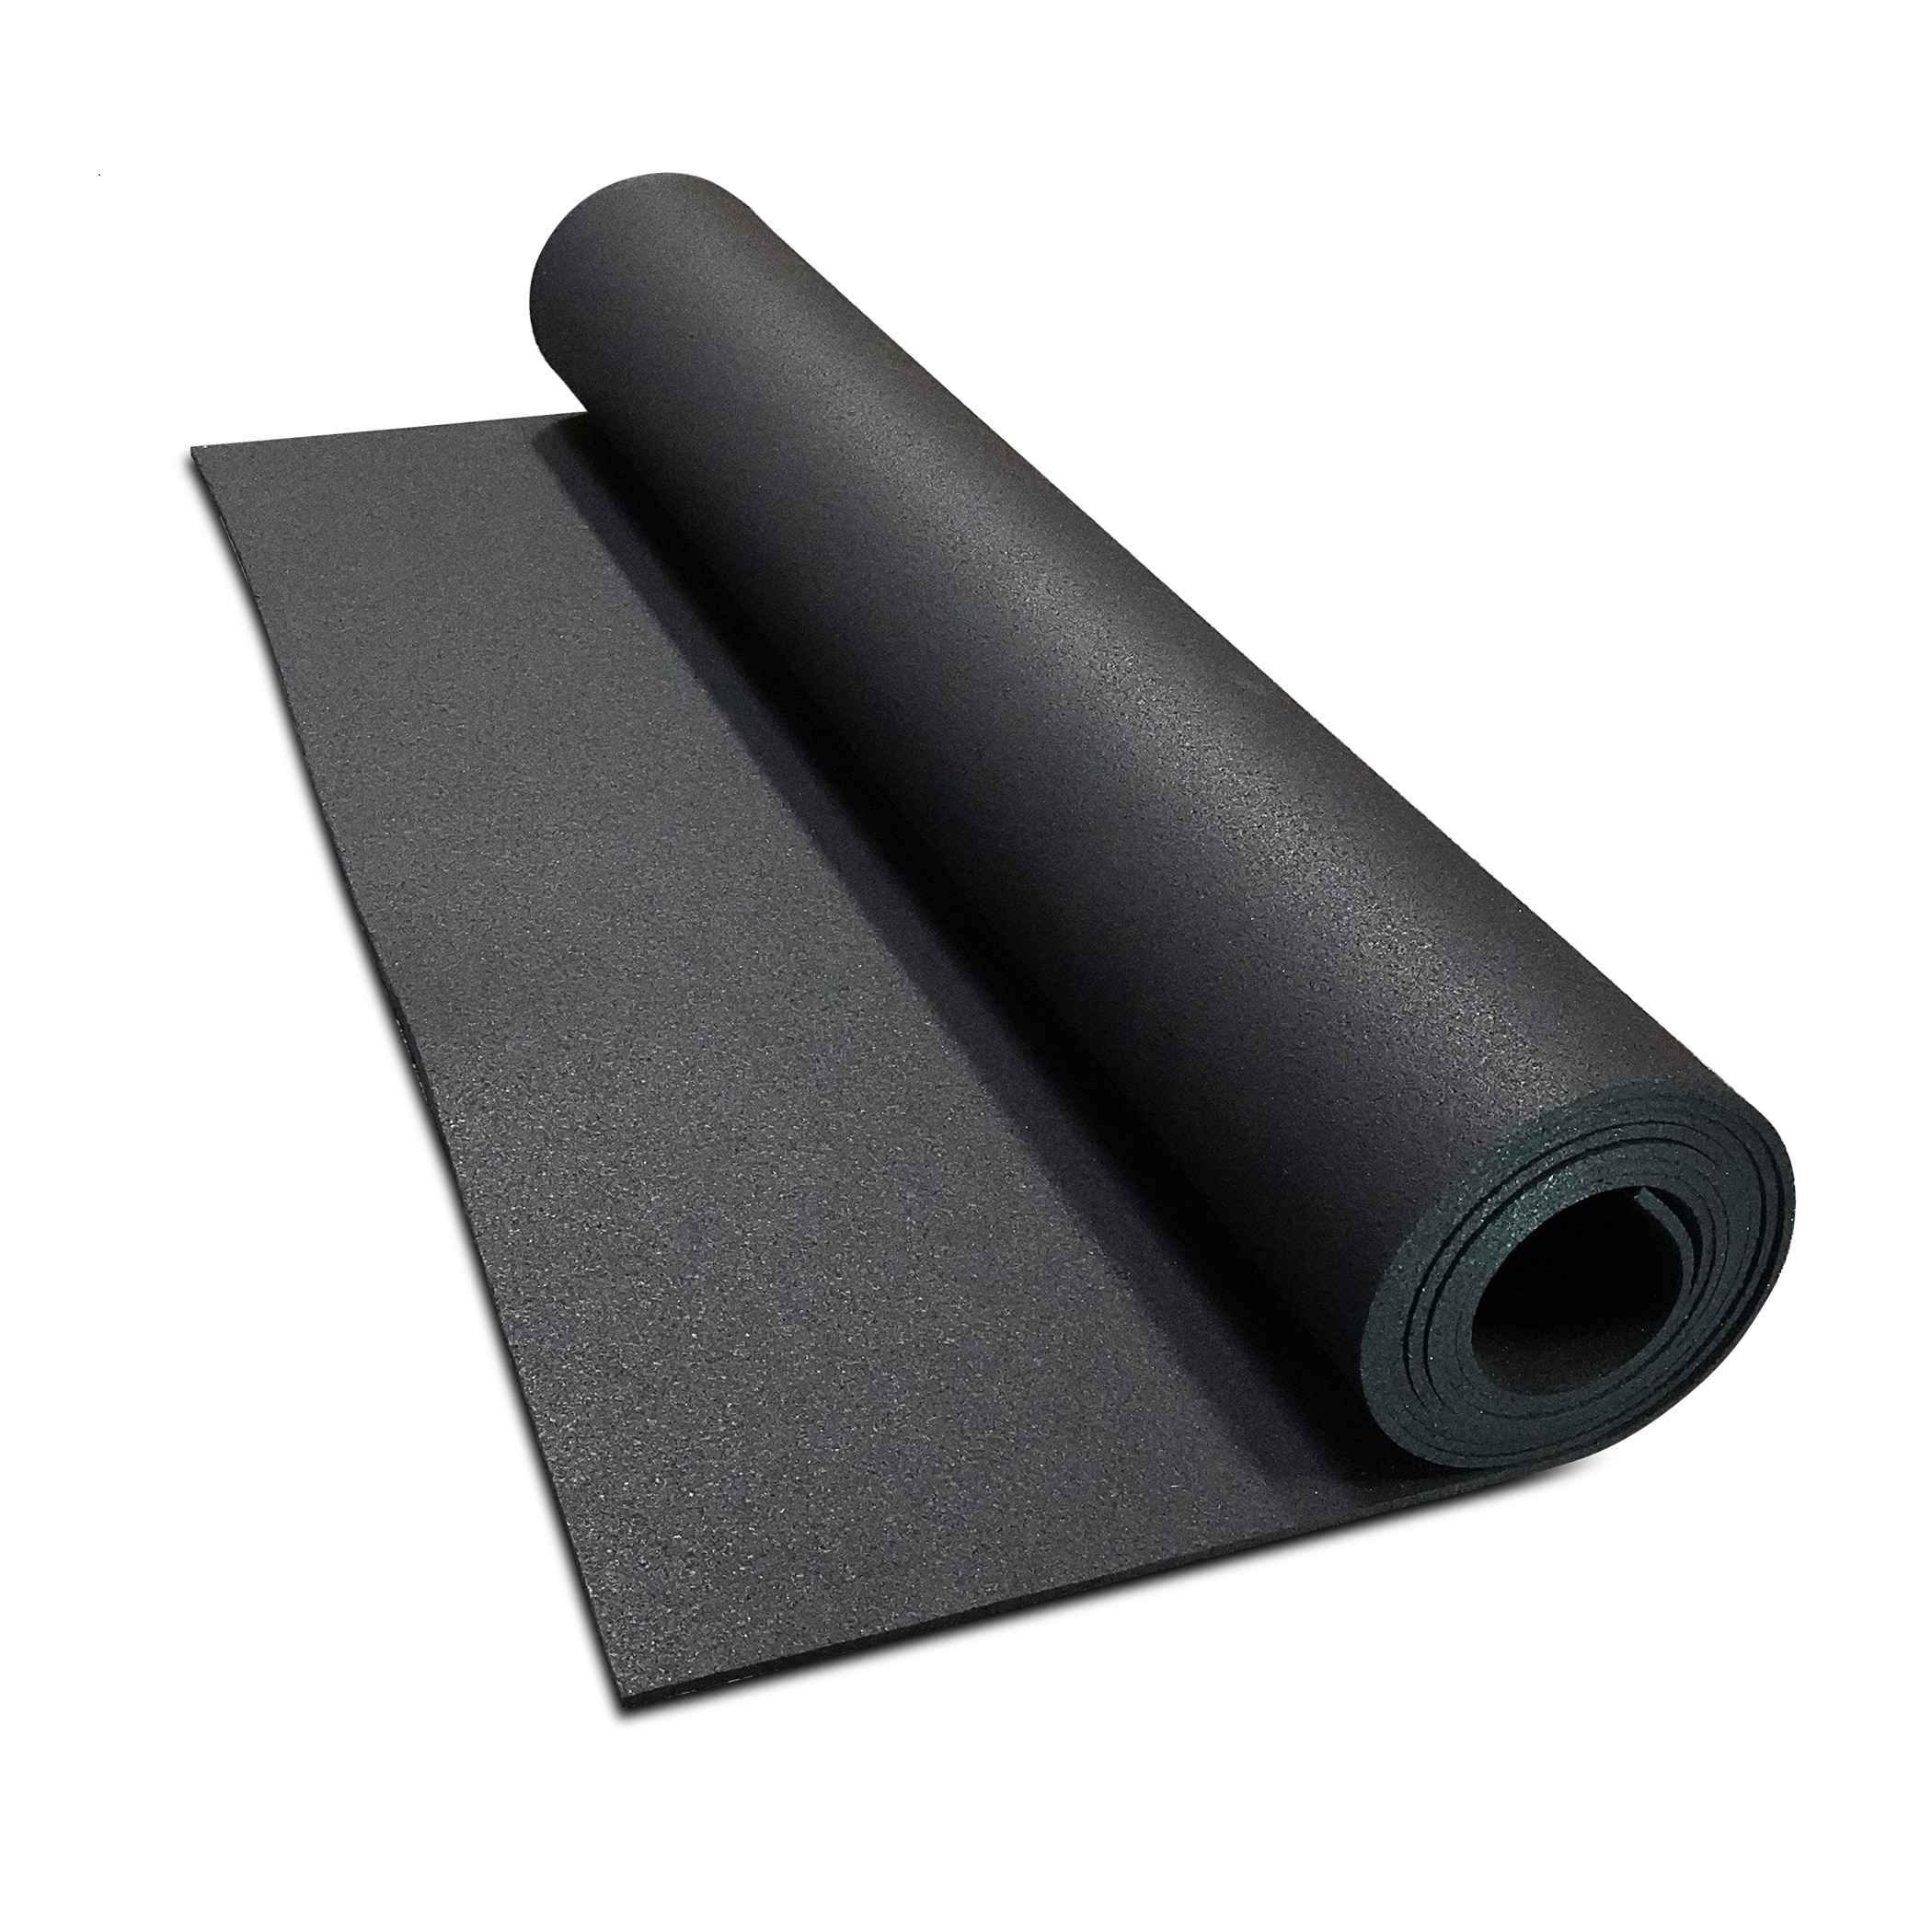 Pink High Density Yoga Mat 24 in. W x 72 in. L x 0.3 in. T Pilates Gym  Flooring Mat Non Slip (12 sq. ft.)